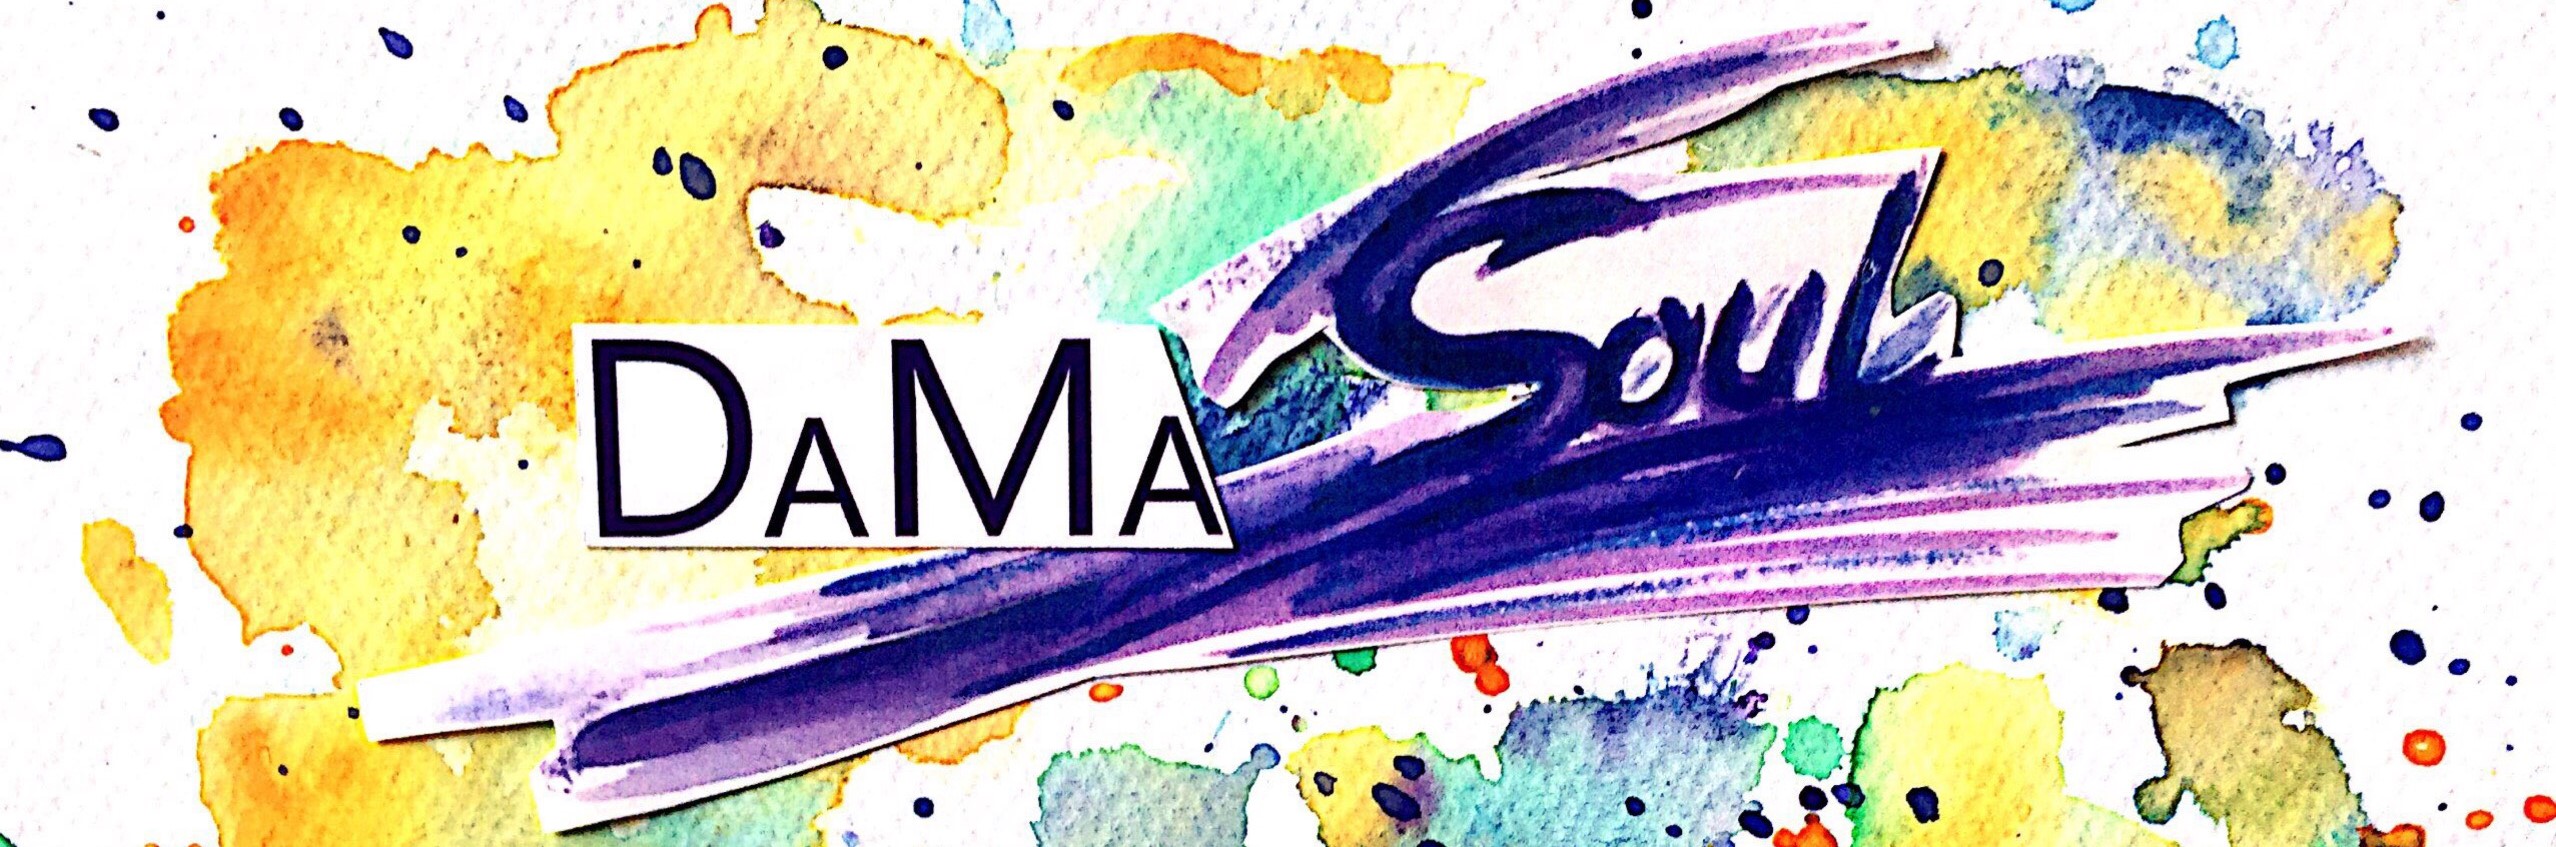 DaMa-Soul